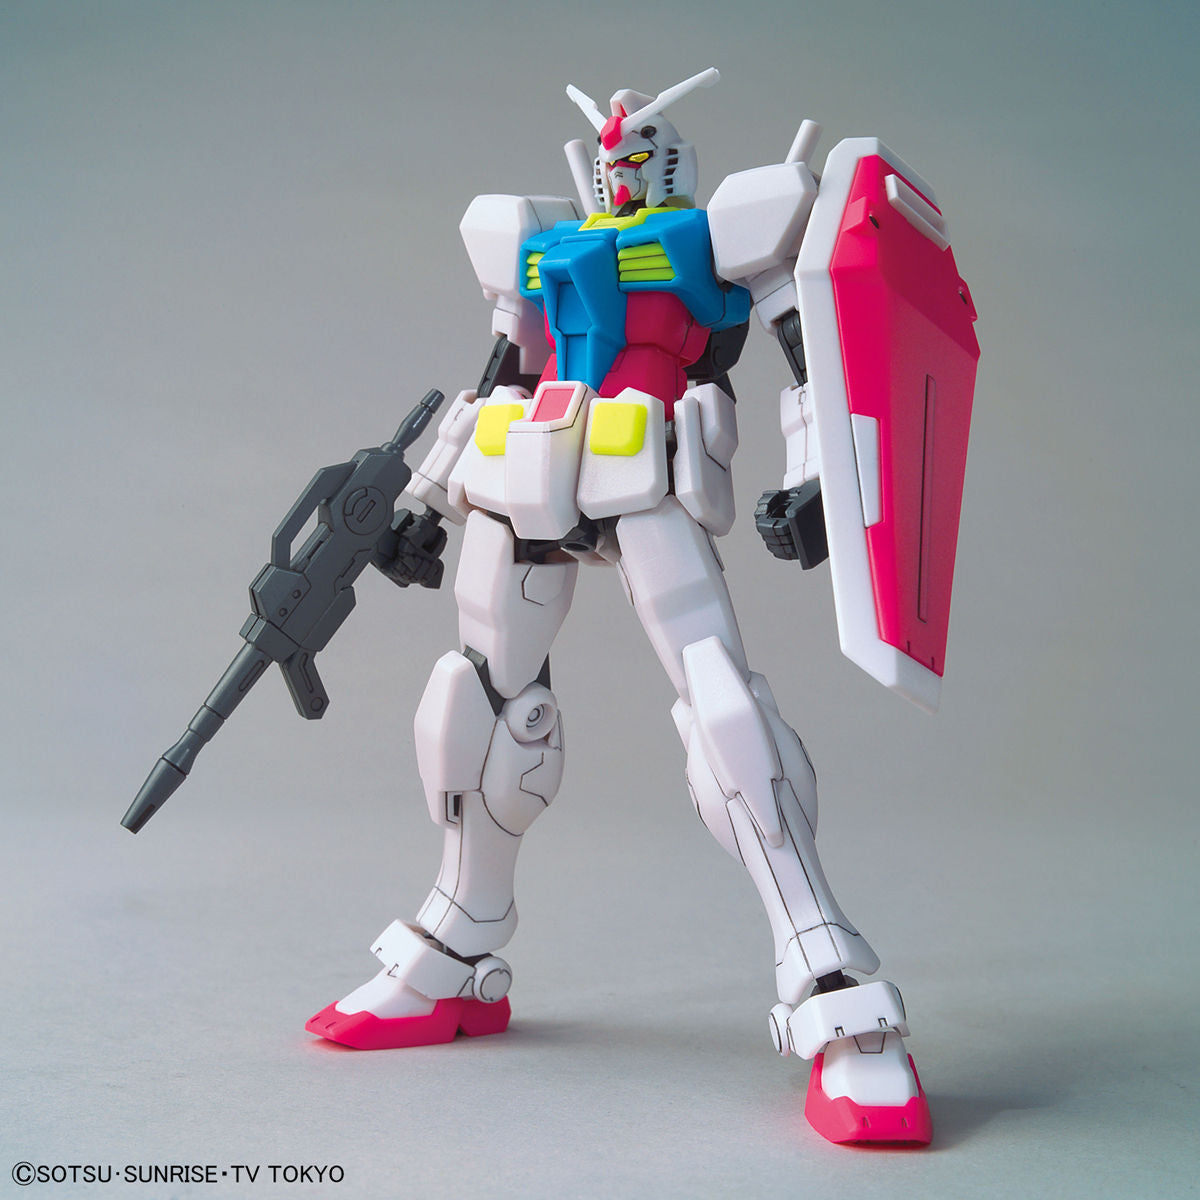 HG GBN-Base Gundam – GM's Mobile Suit 1/144